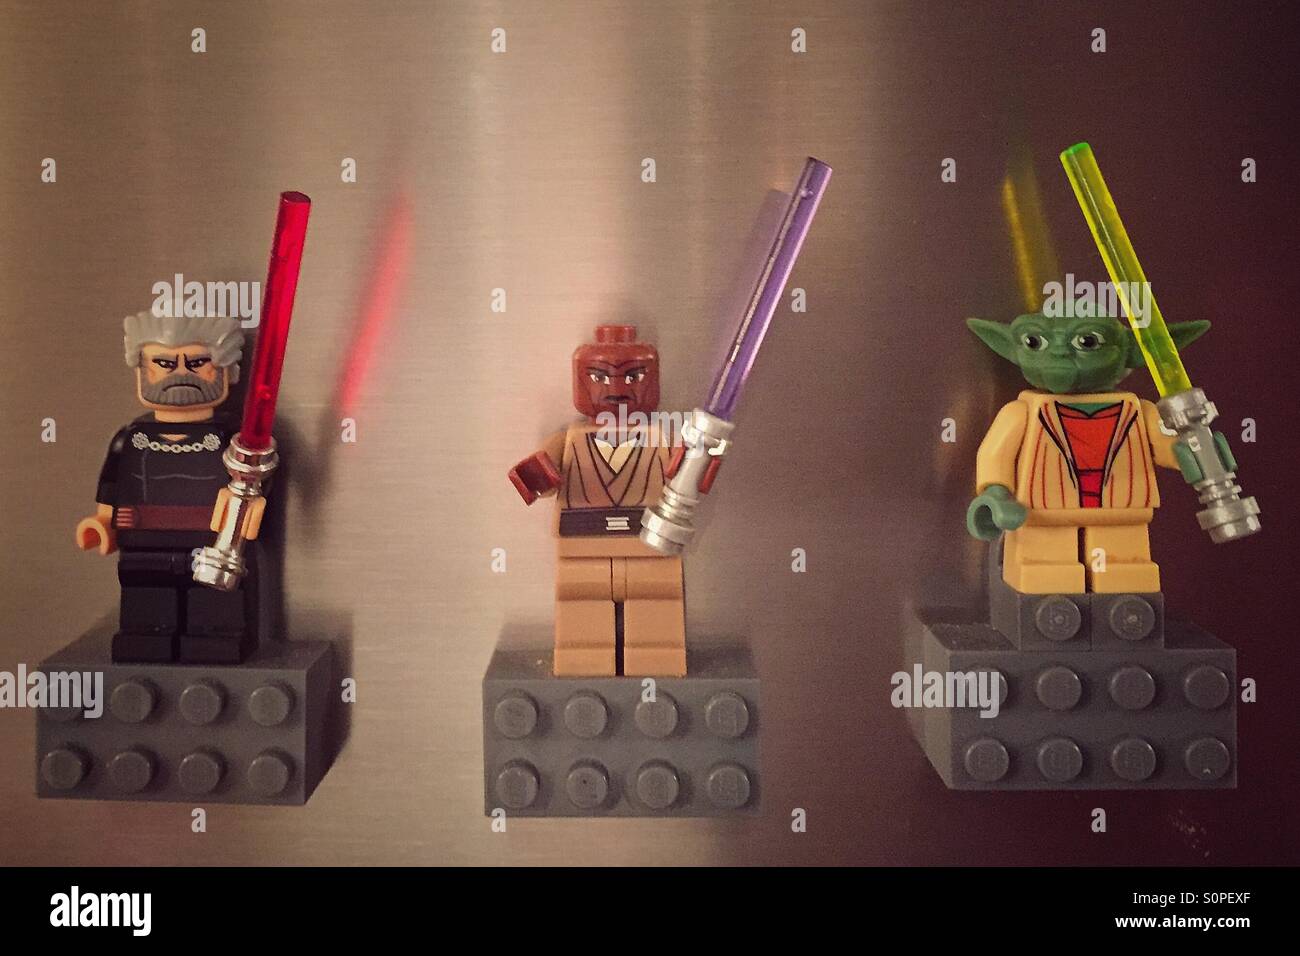 Star Wars, Lego, fridge magnet Stock Photo - Alamy